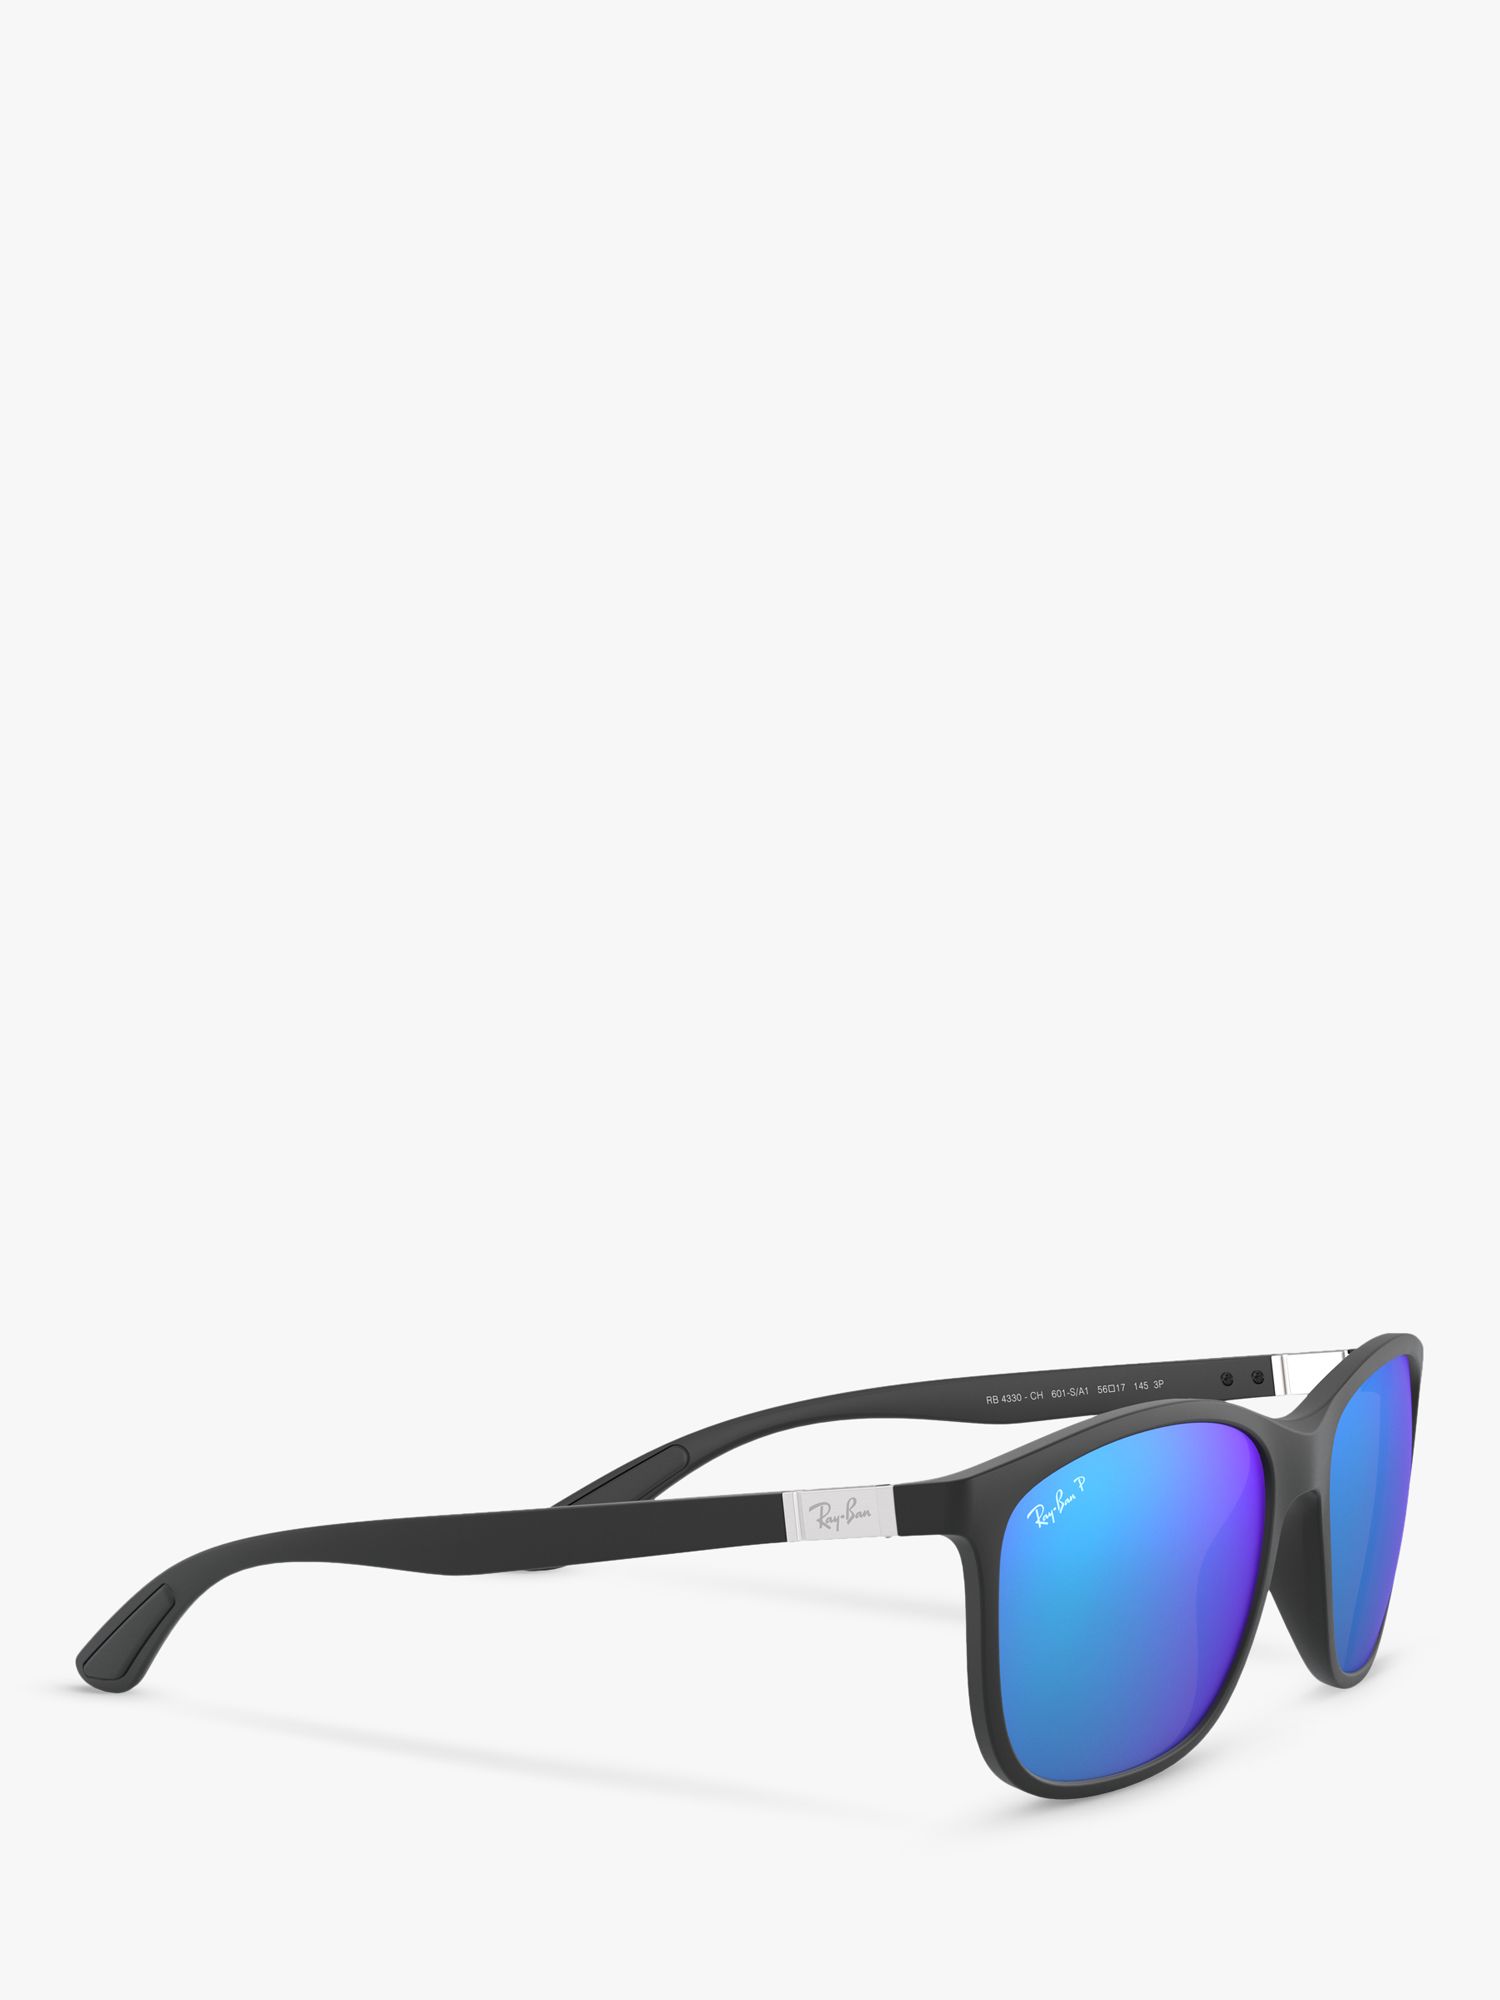 Ray-Ban RB4330 Unisex Chromance Polarised Square Sunglasses, Black/Mirrored  Blue at John Lewis & Partners